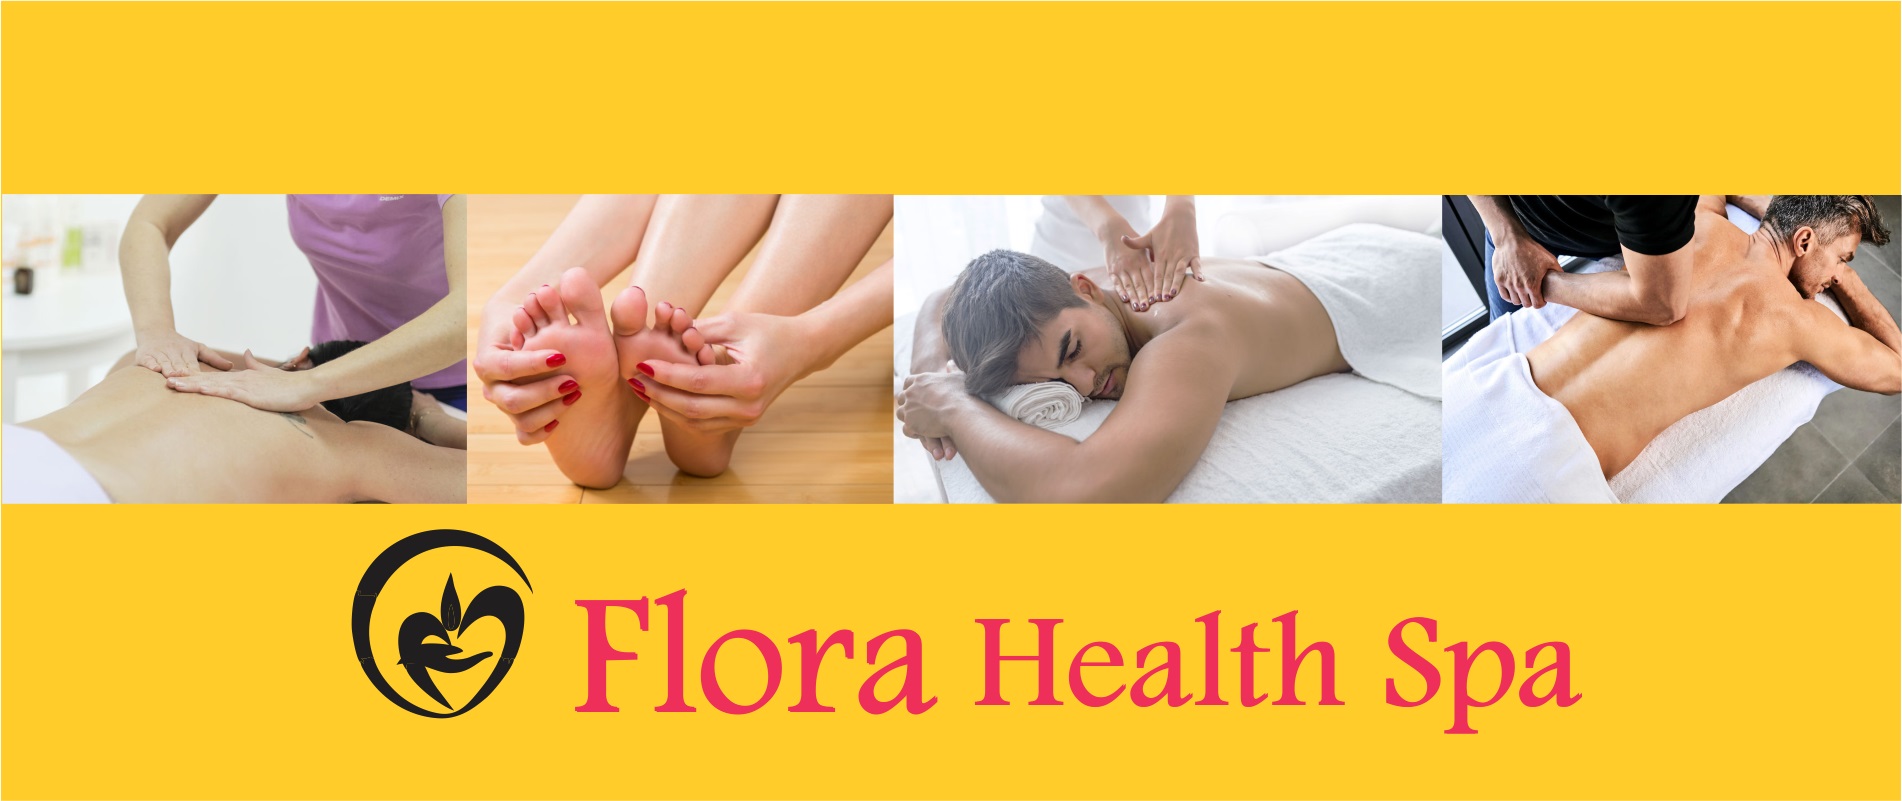 Flora Health Spa